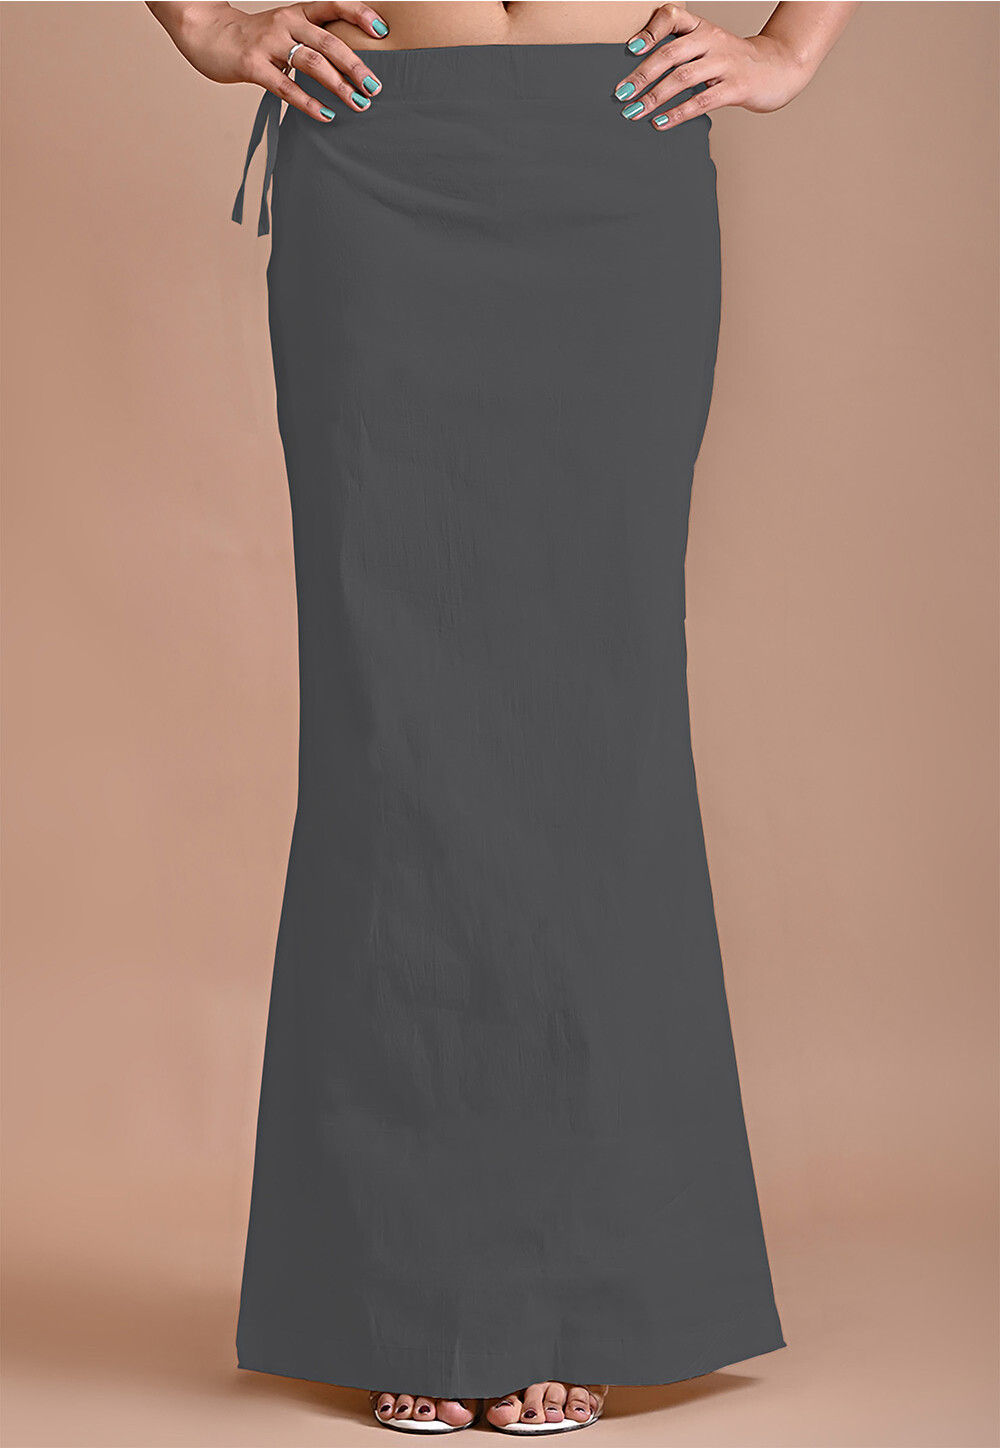 Womens Black Color Fashionable Body Shaper Petticoat